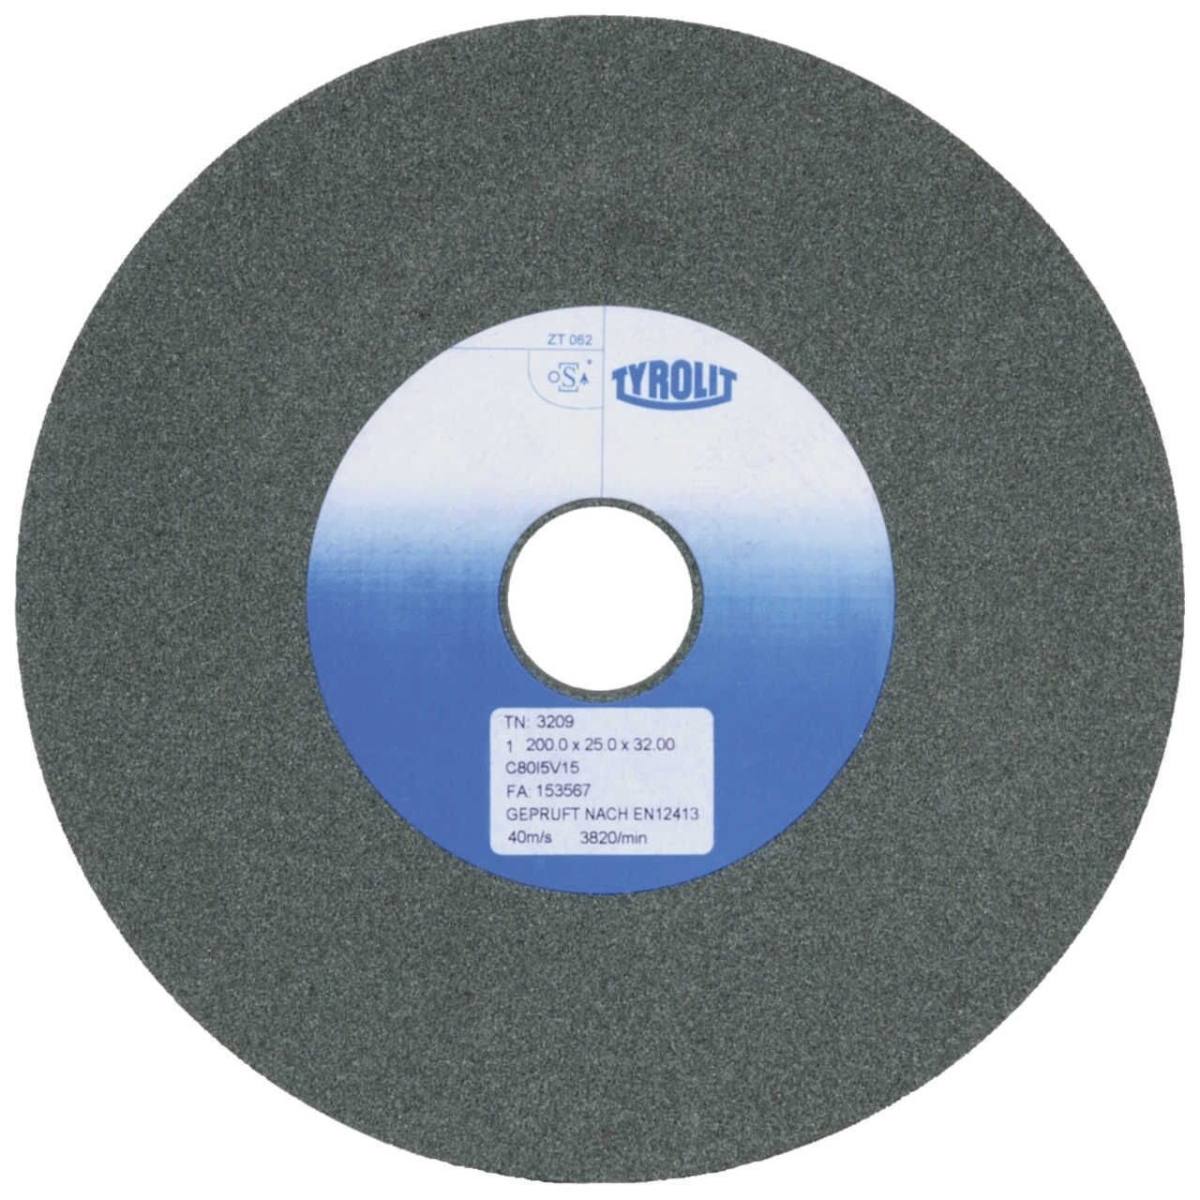 TYROLIT discos de desbaste cerámicos convencionales DxDxH 200x25x32 Para metales no férricos, forma: 1, Art. 34287489